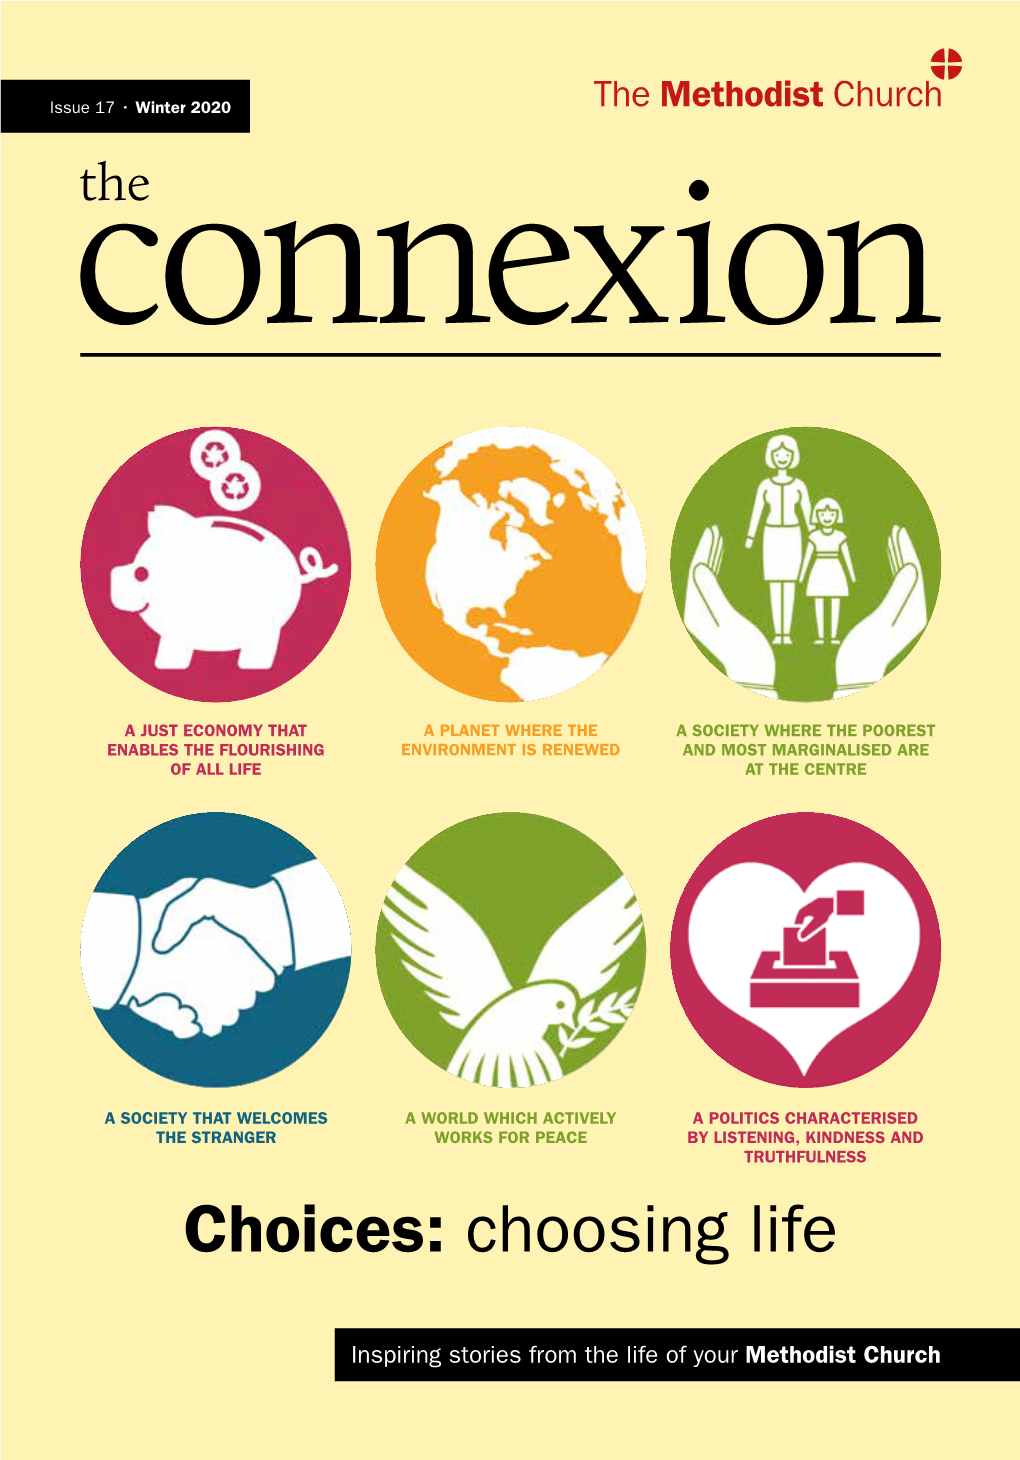 Choices: Choosing Life